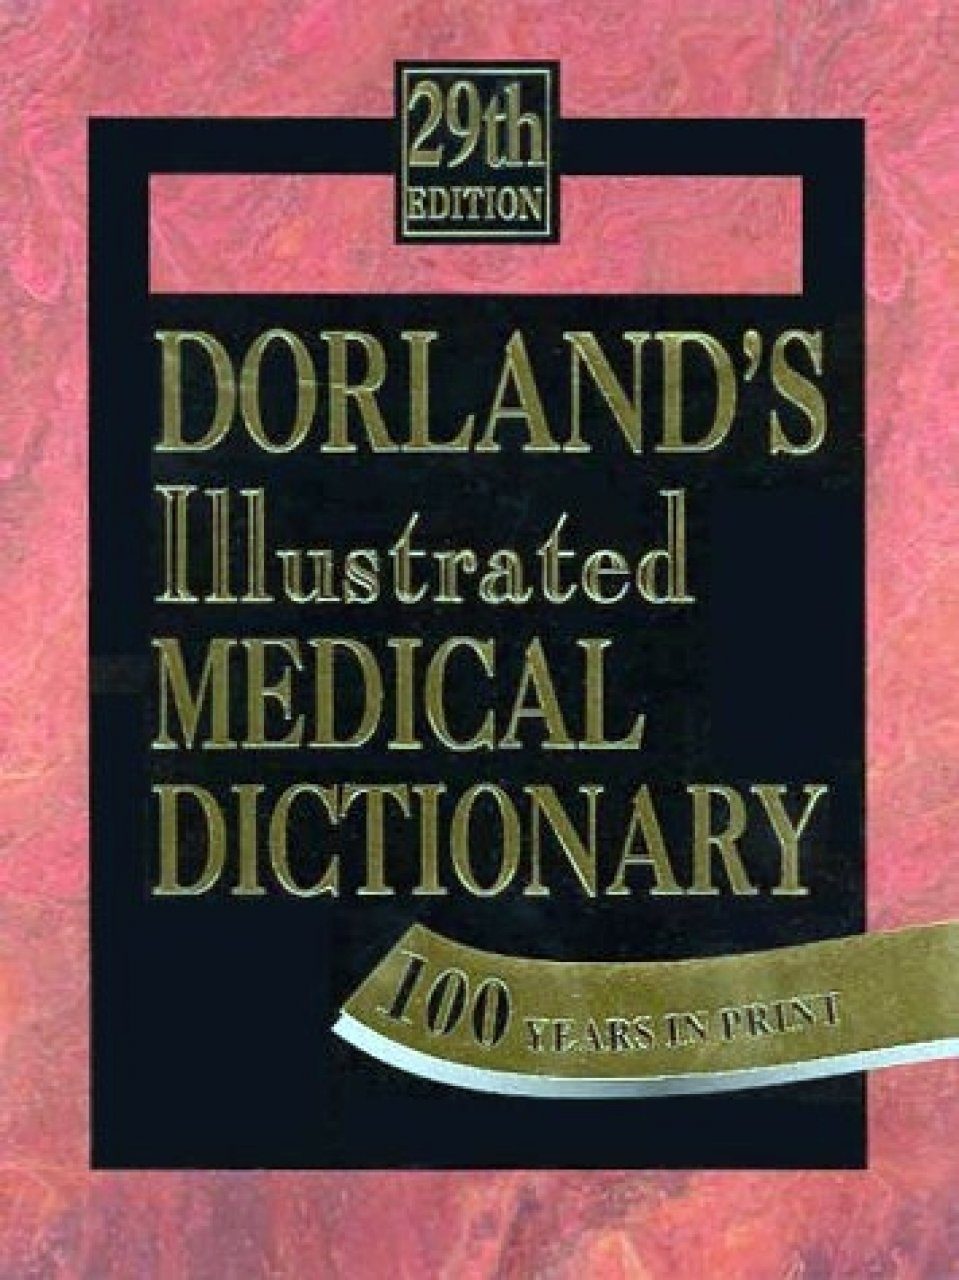 dorlands illustrated medical dictionary pdf download